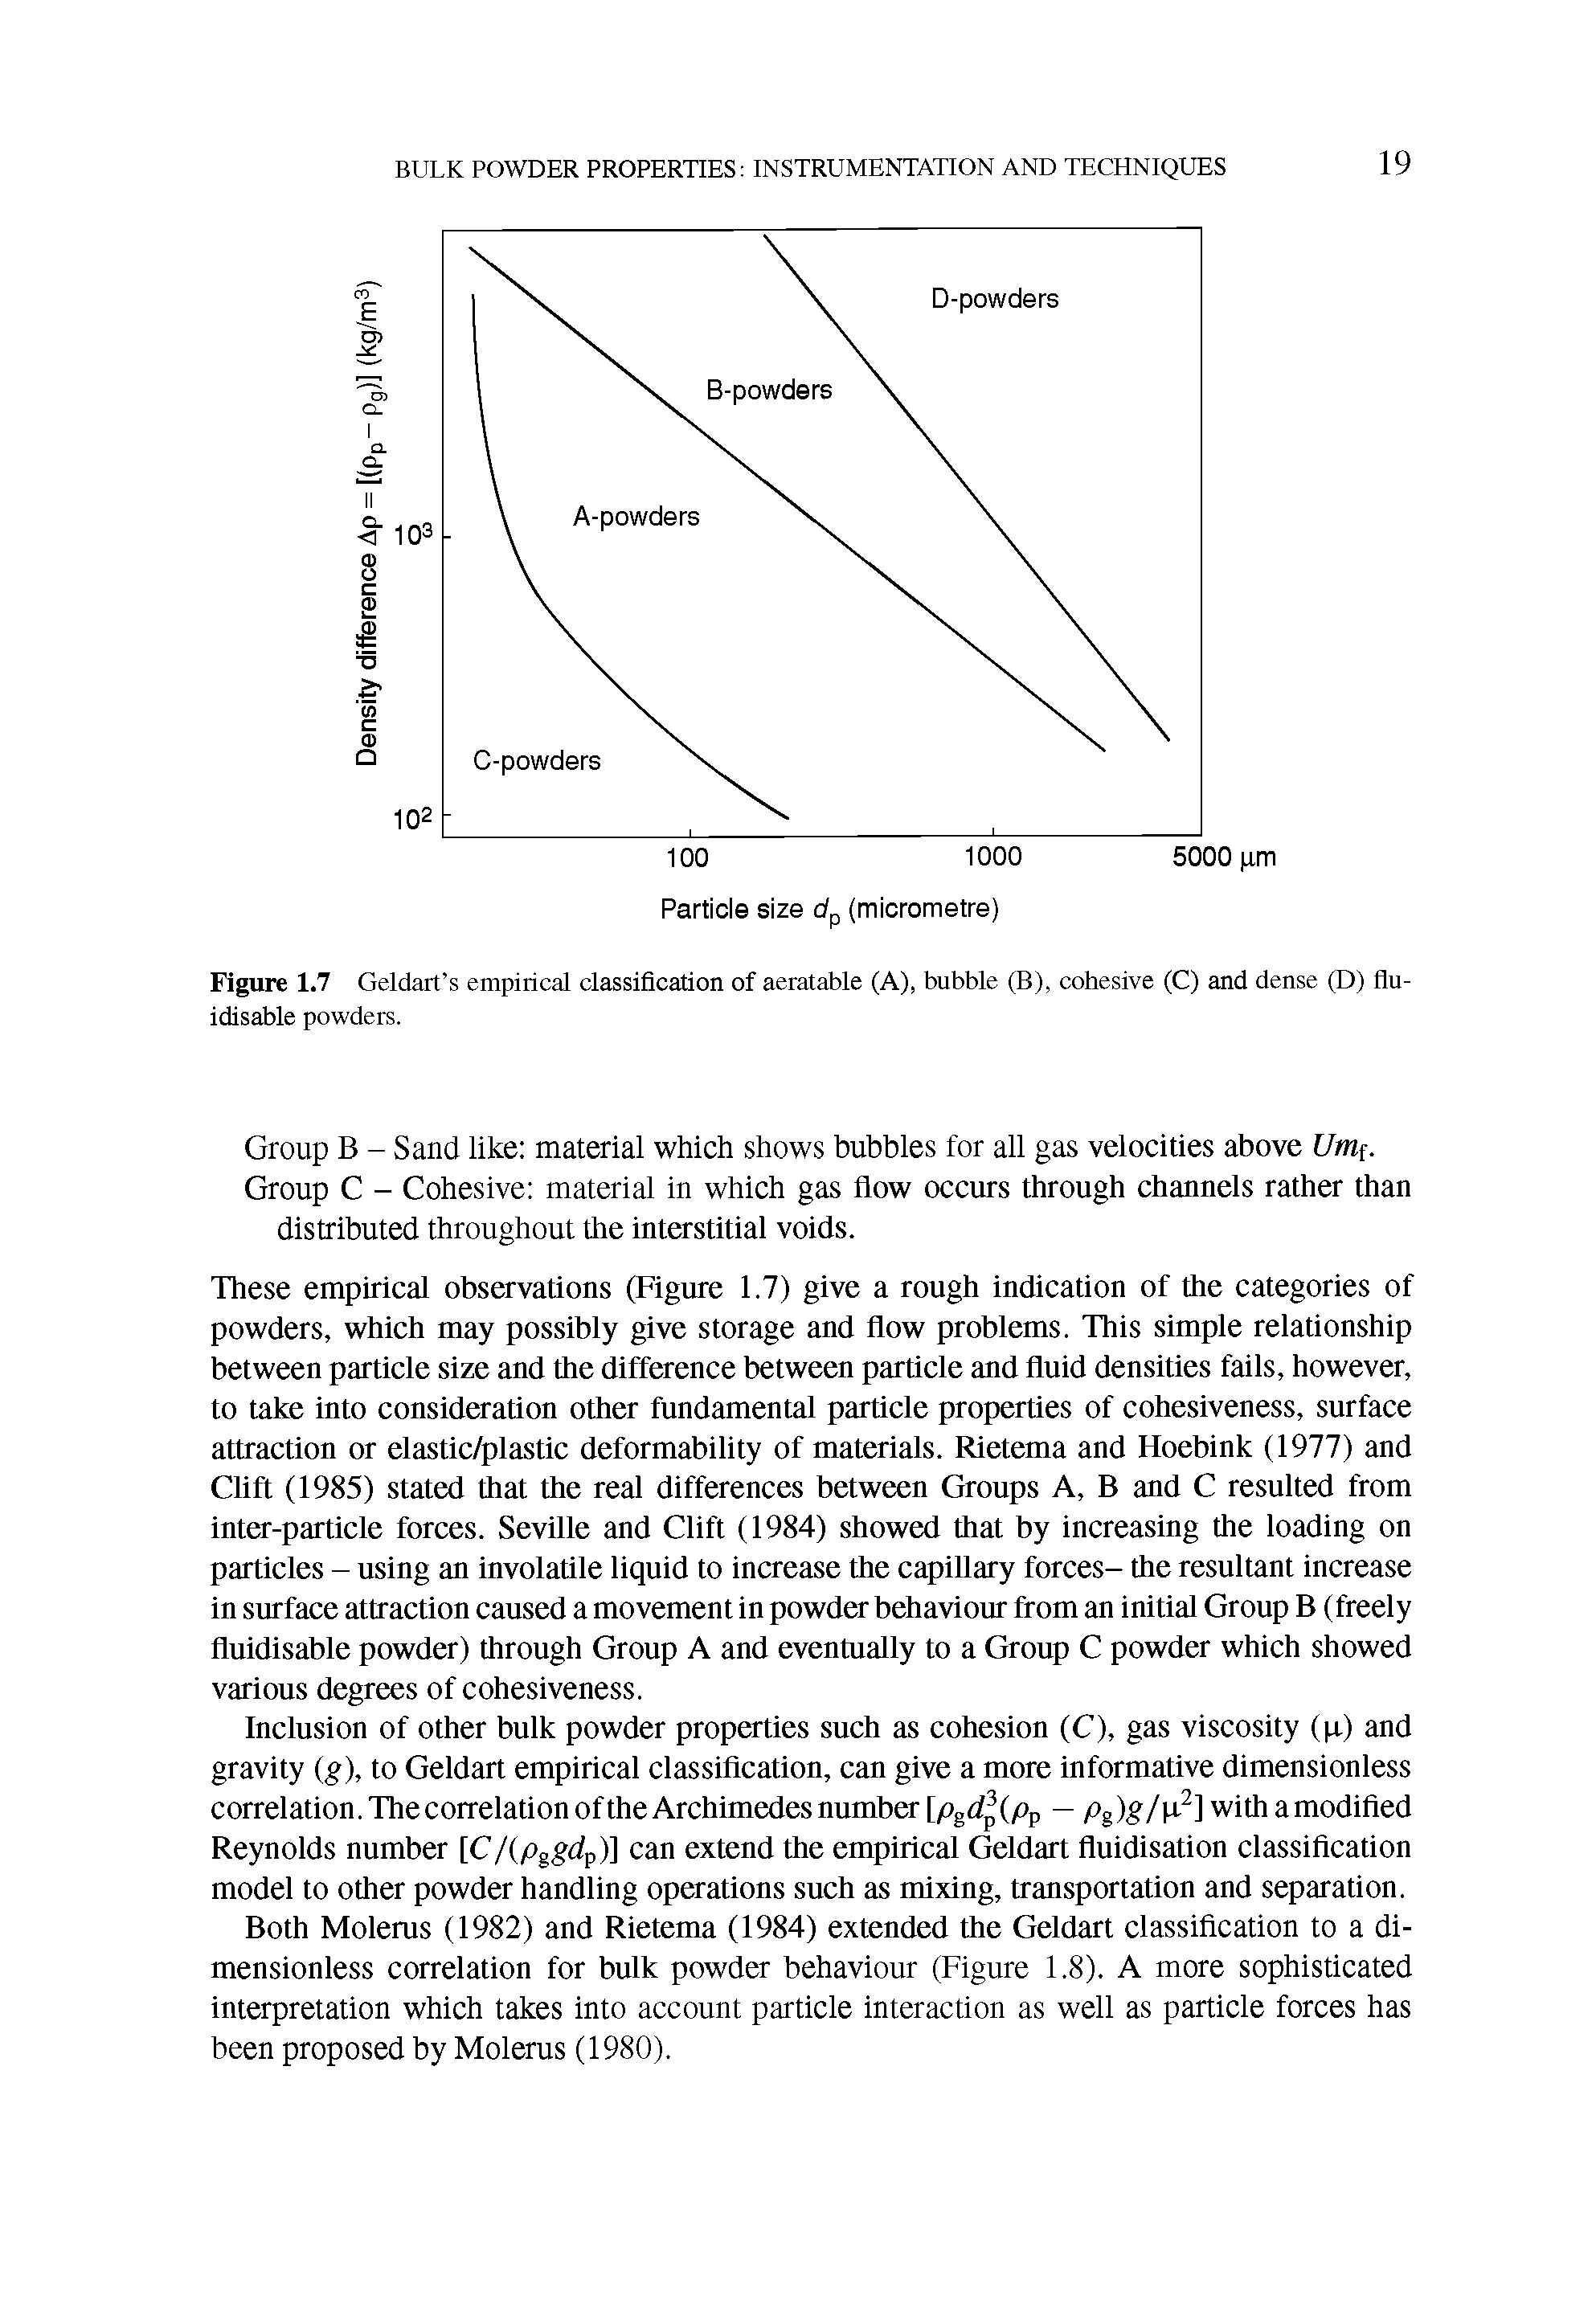 Figure 1.7 Geldart s empirical classification of aeratable (A), bubble (B), cohesive (C) and dense (D) fiu-idisable powders.